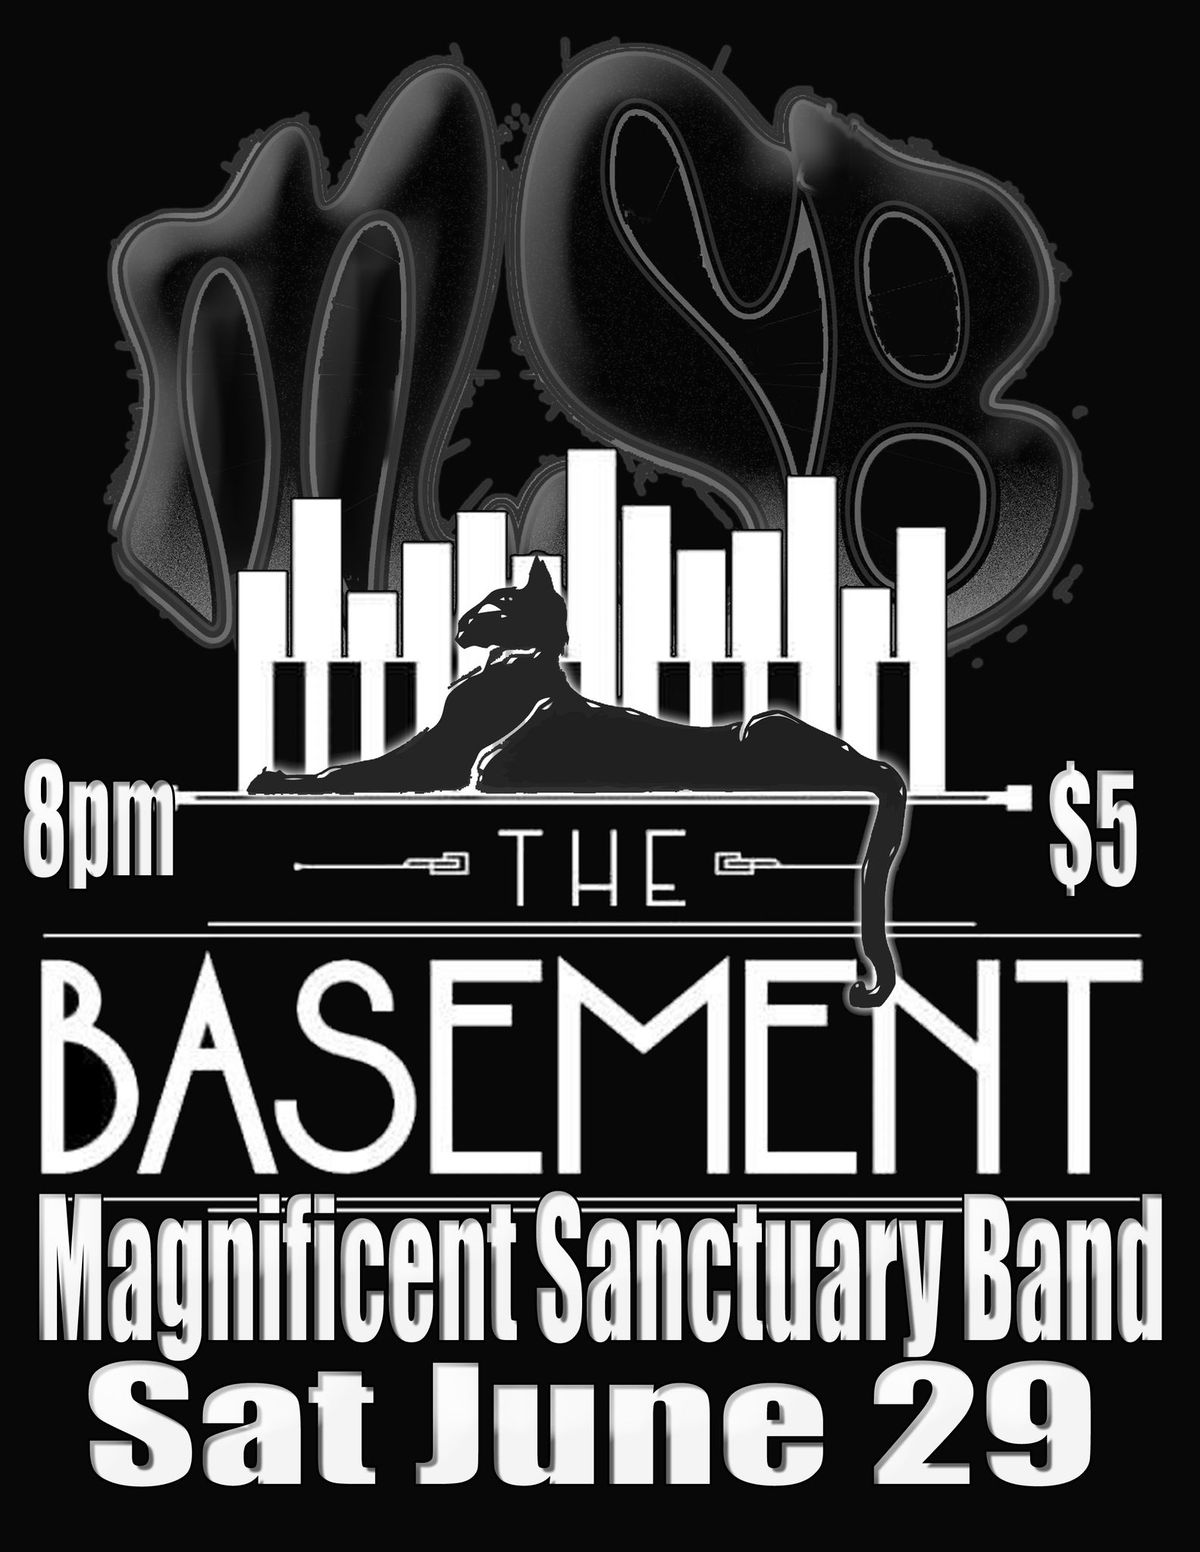 Magnificent sanctuary band returns to the basement